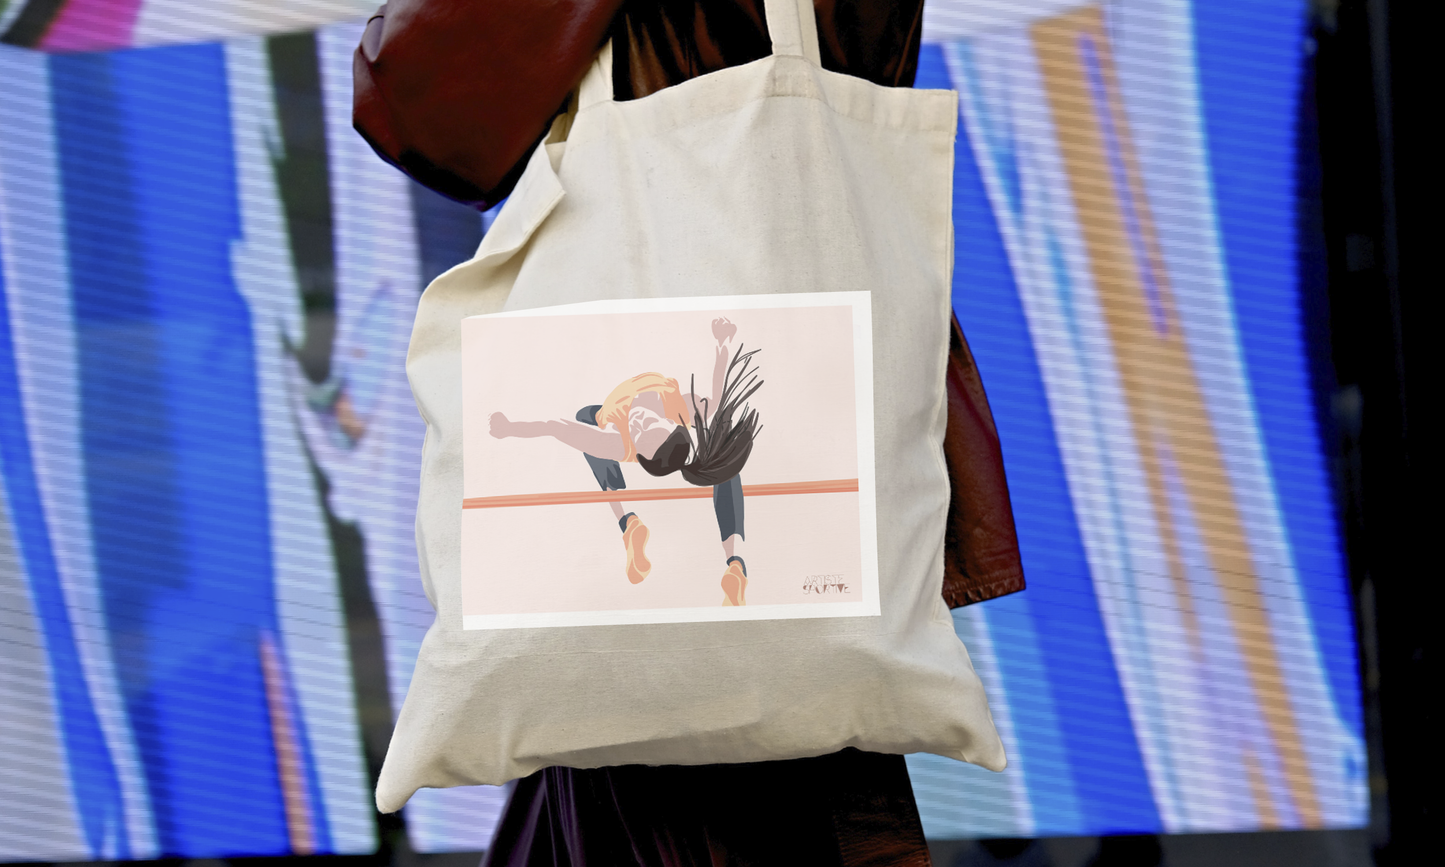 Tote bag or athletic bag "women's high jump"